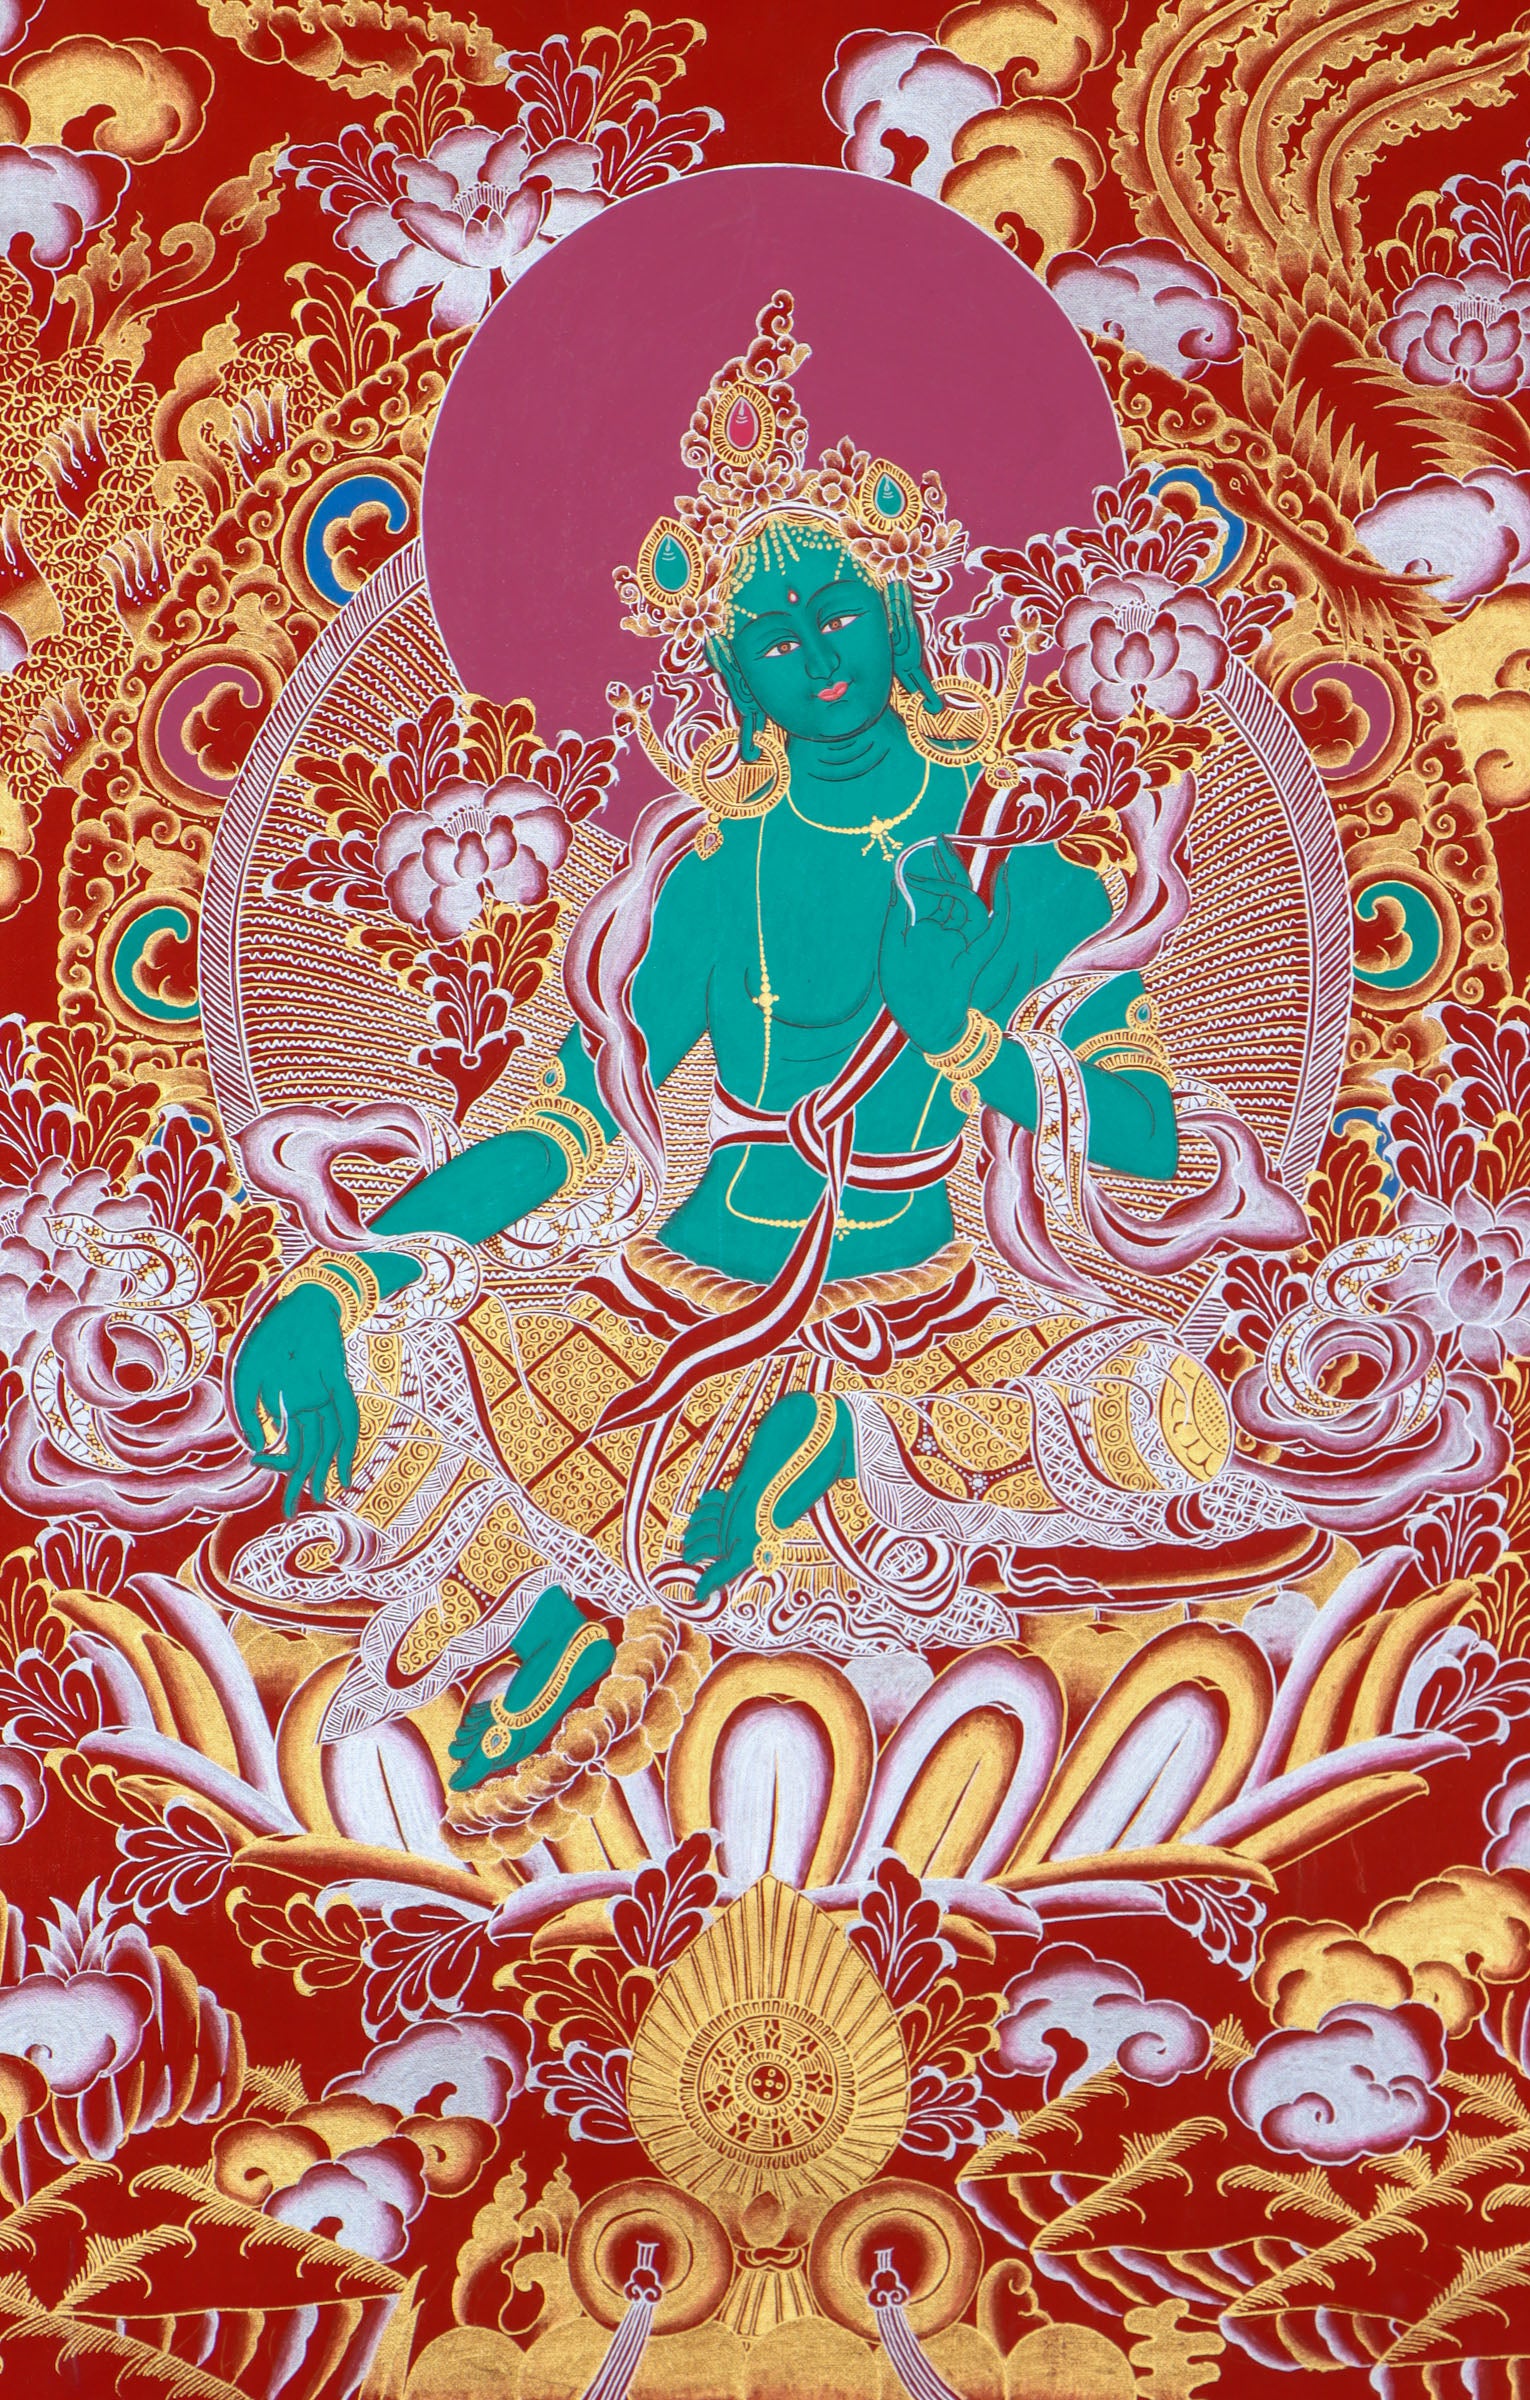 Green Tara - goddess of compassion and liberation.